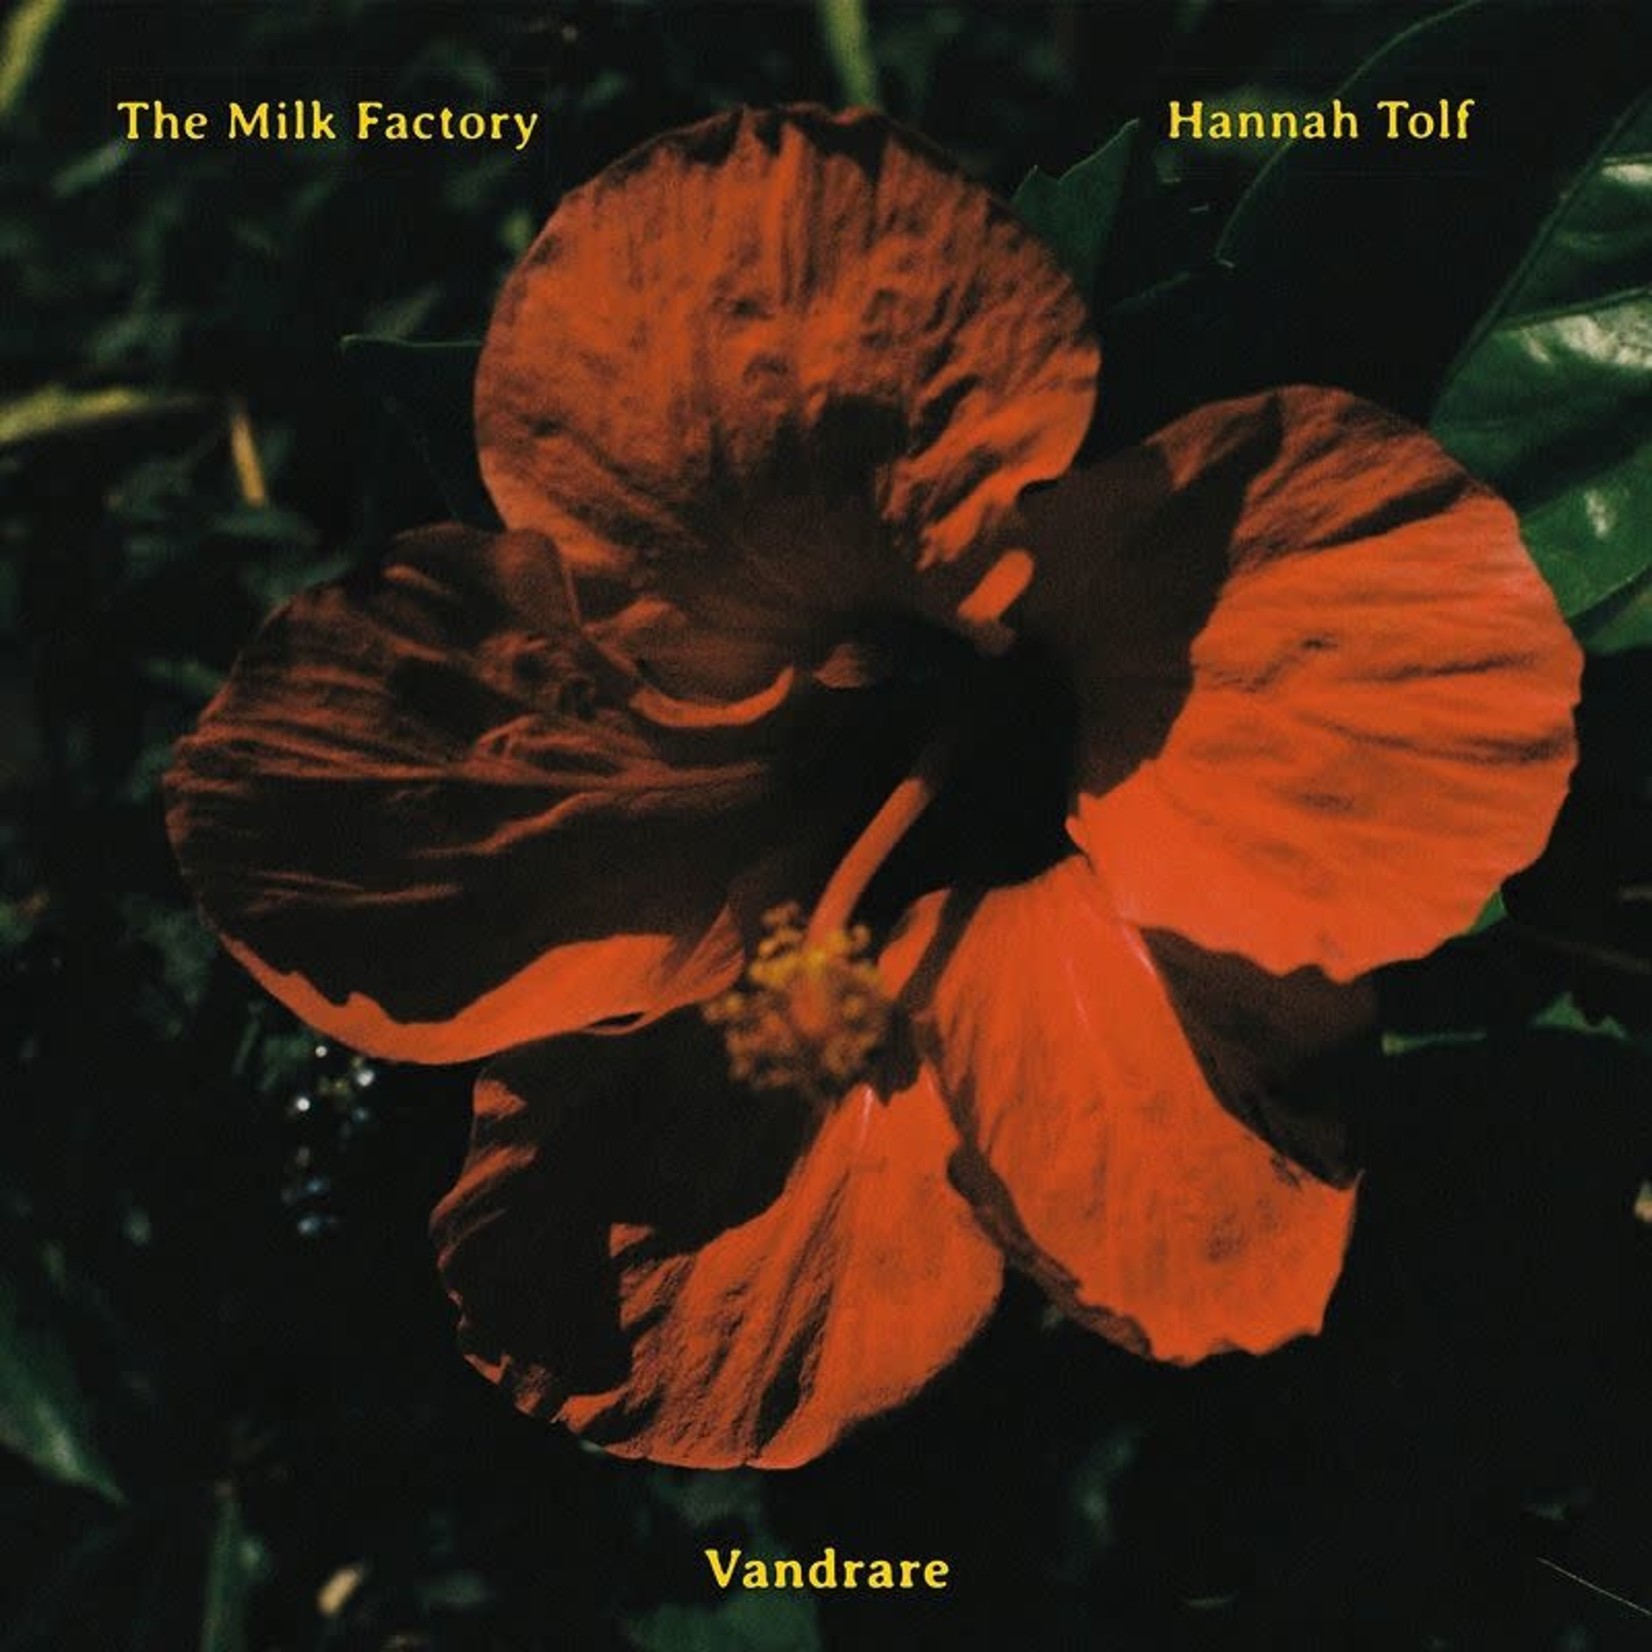 The Milk Factory & Hannah Tolf - Vandrare